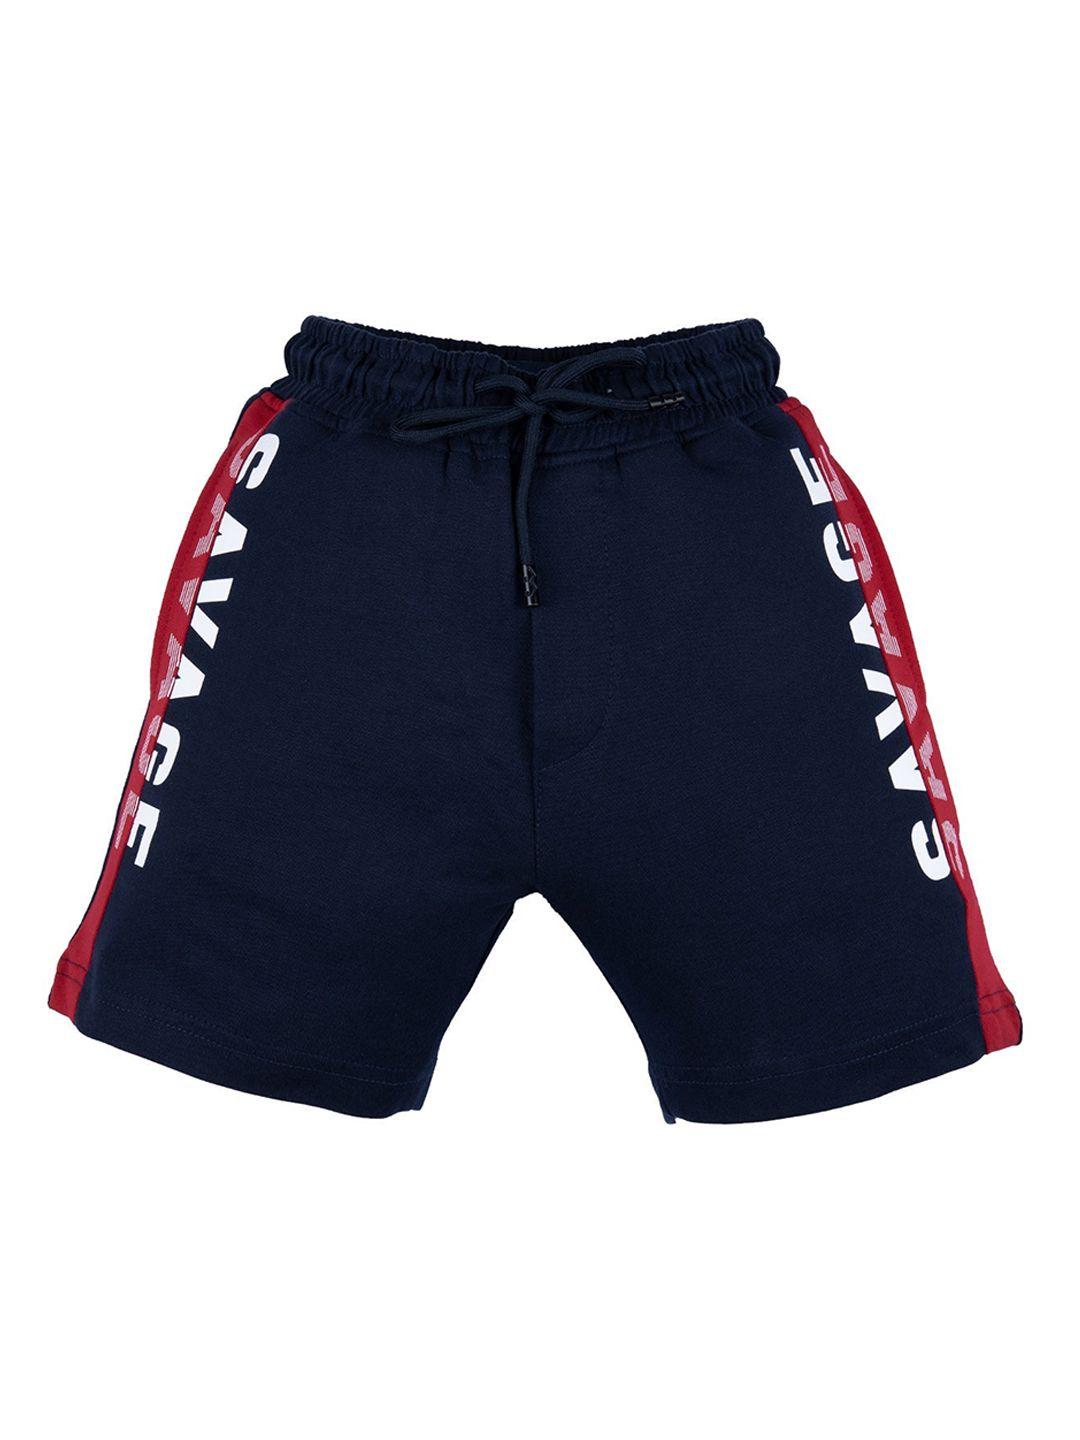 status quo boys navy blue printed regular fit shorts